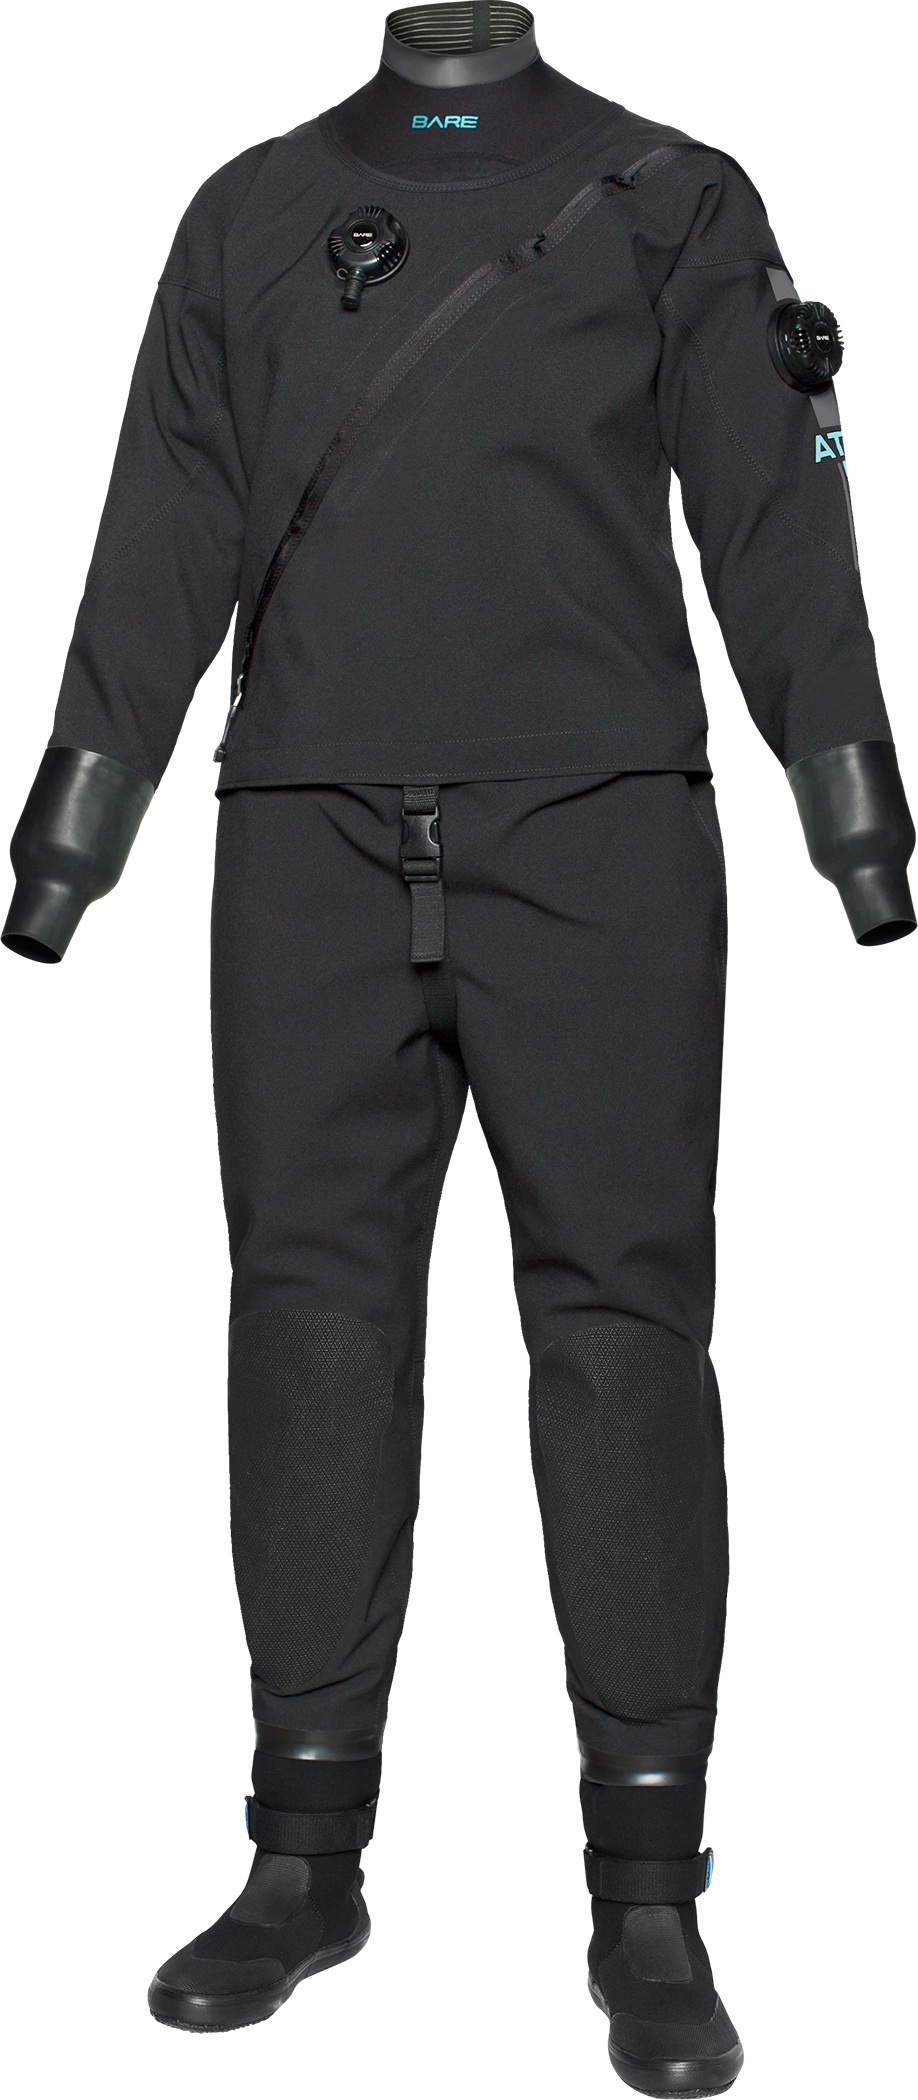 Bare Aqua-Trek 1 Women's Tech Dry Suit